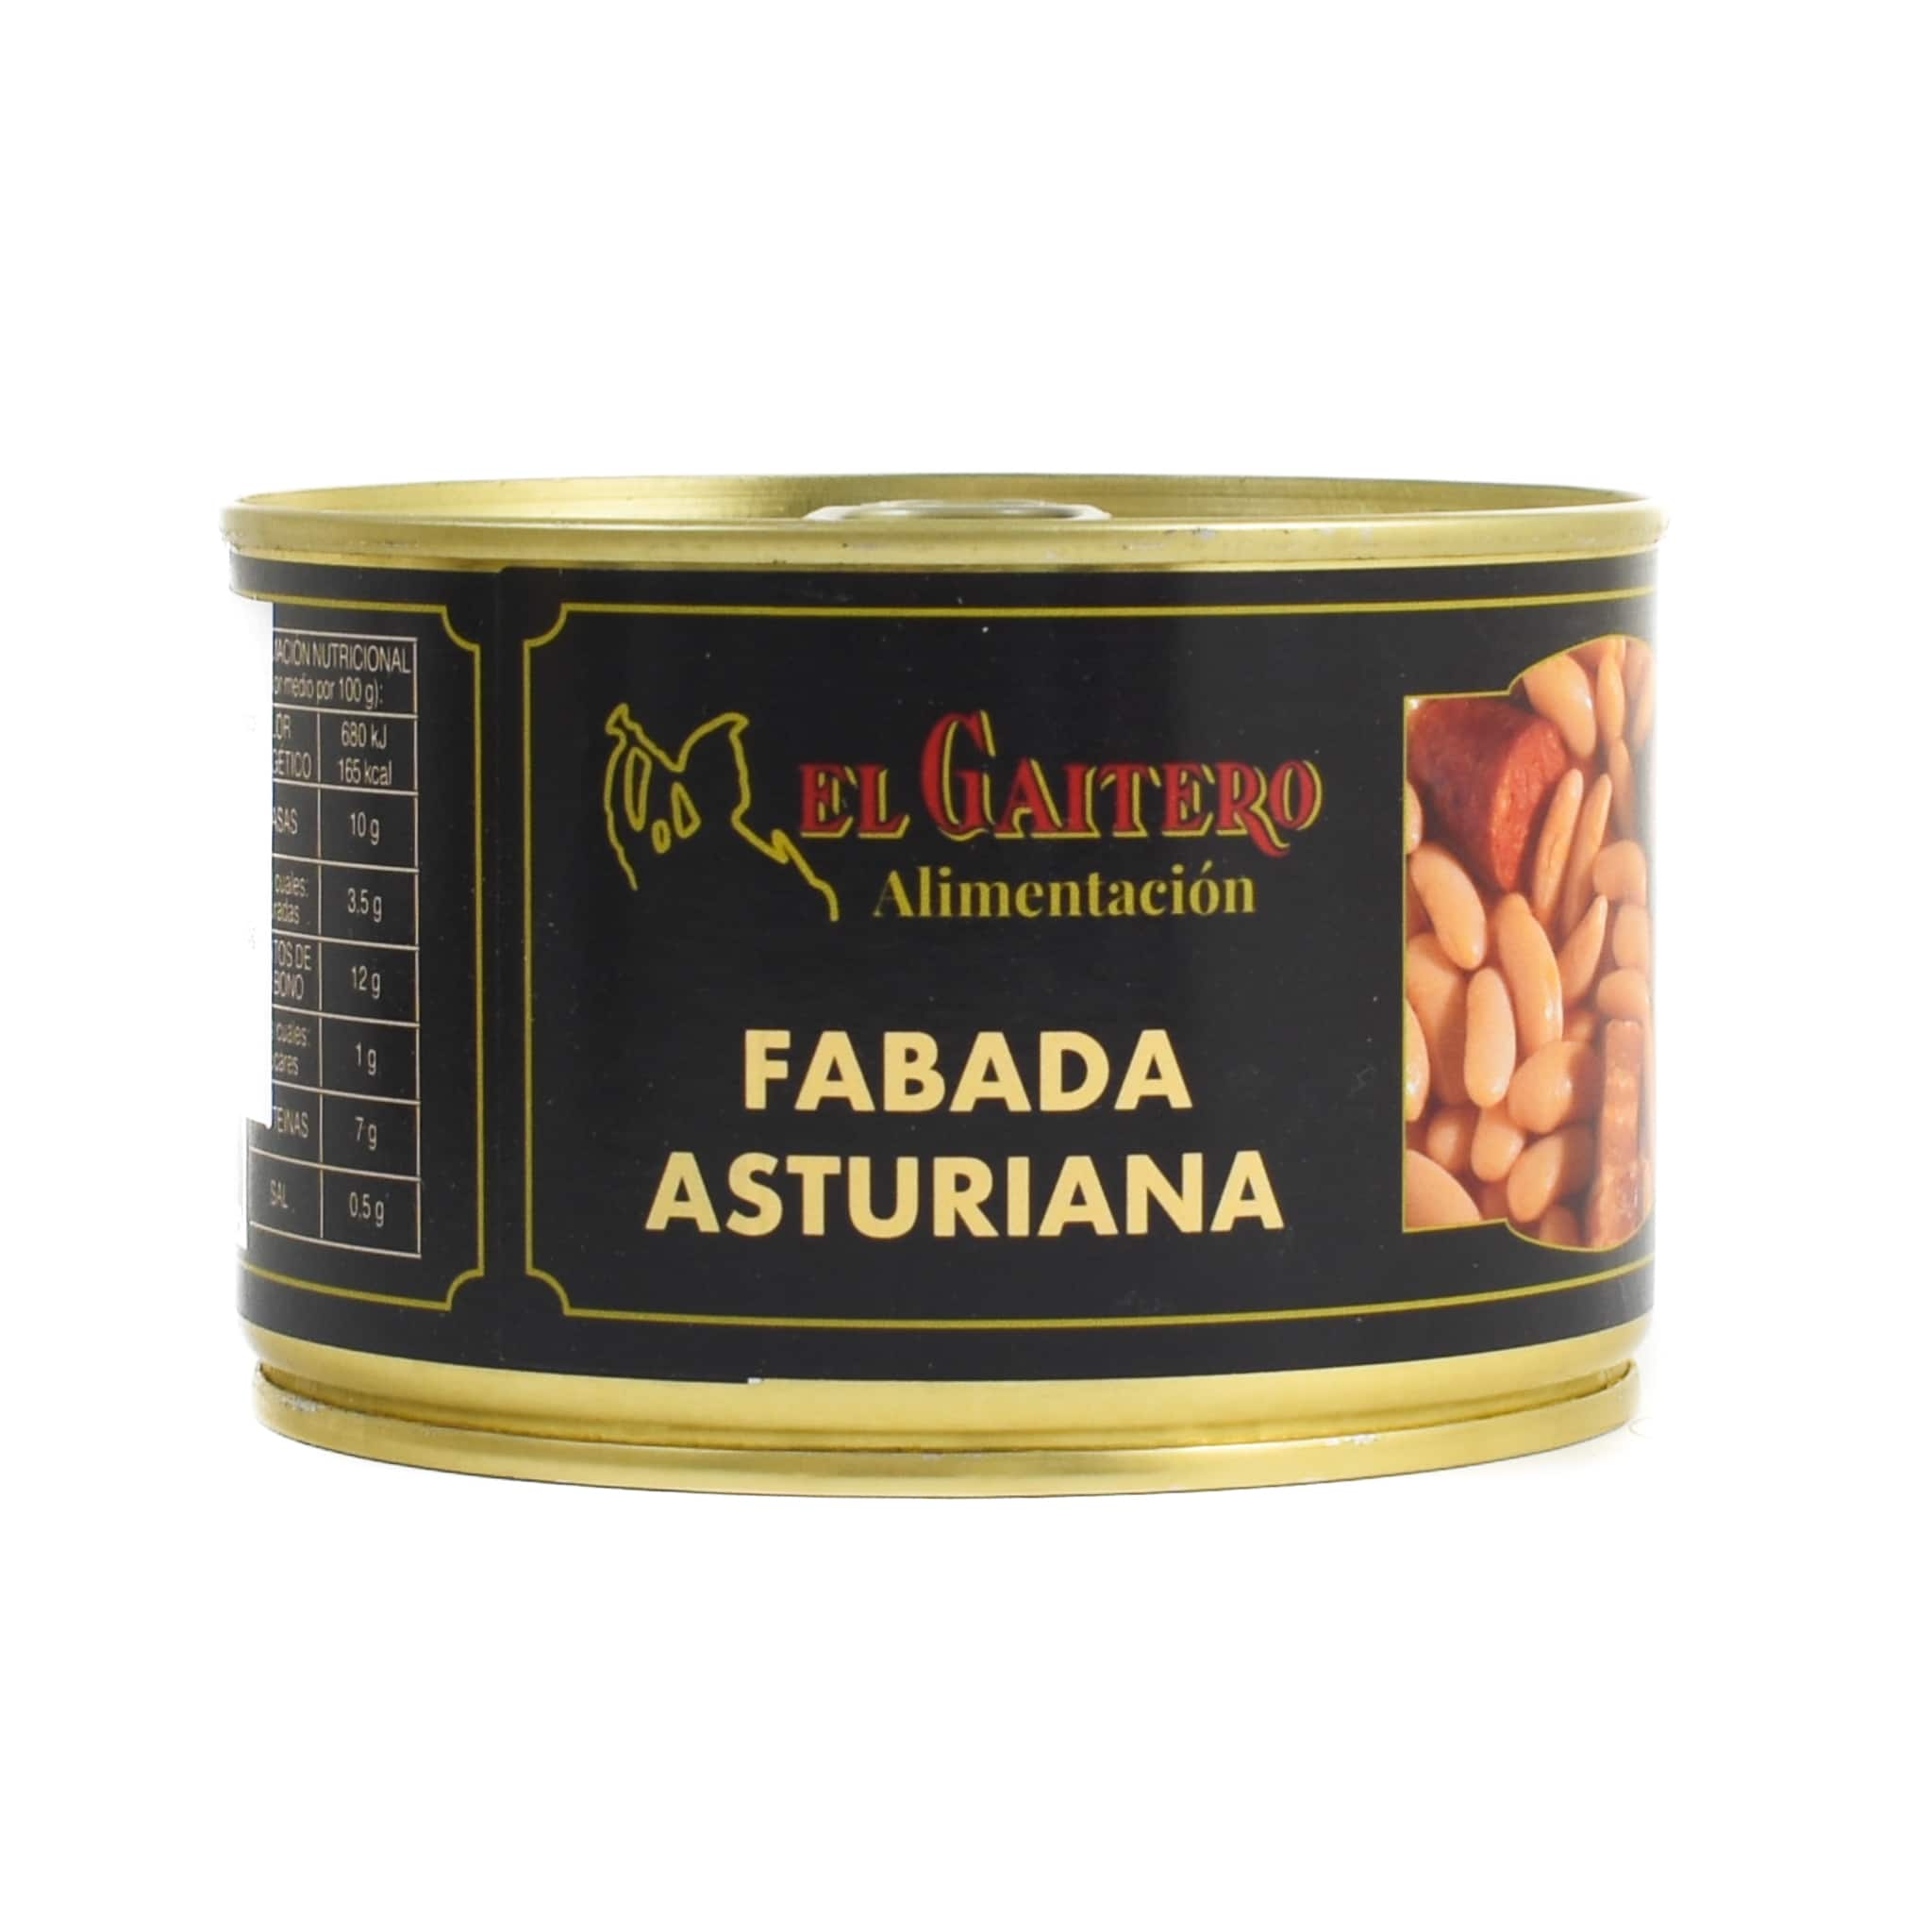 Fabada Asturiana Bean Stew, 430g